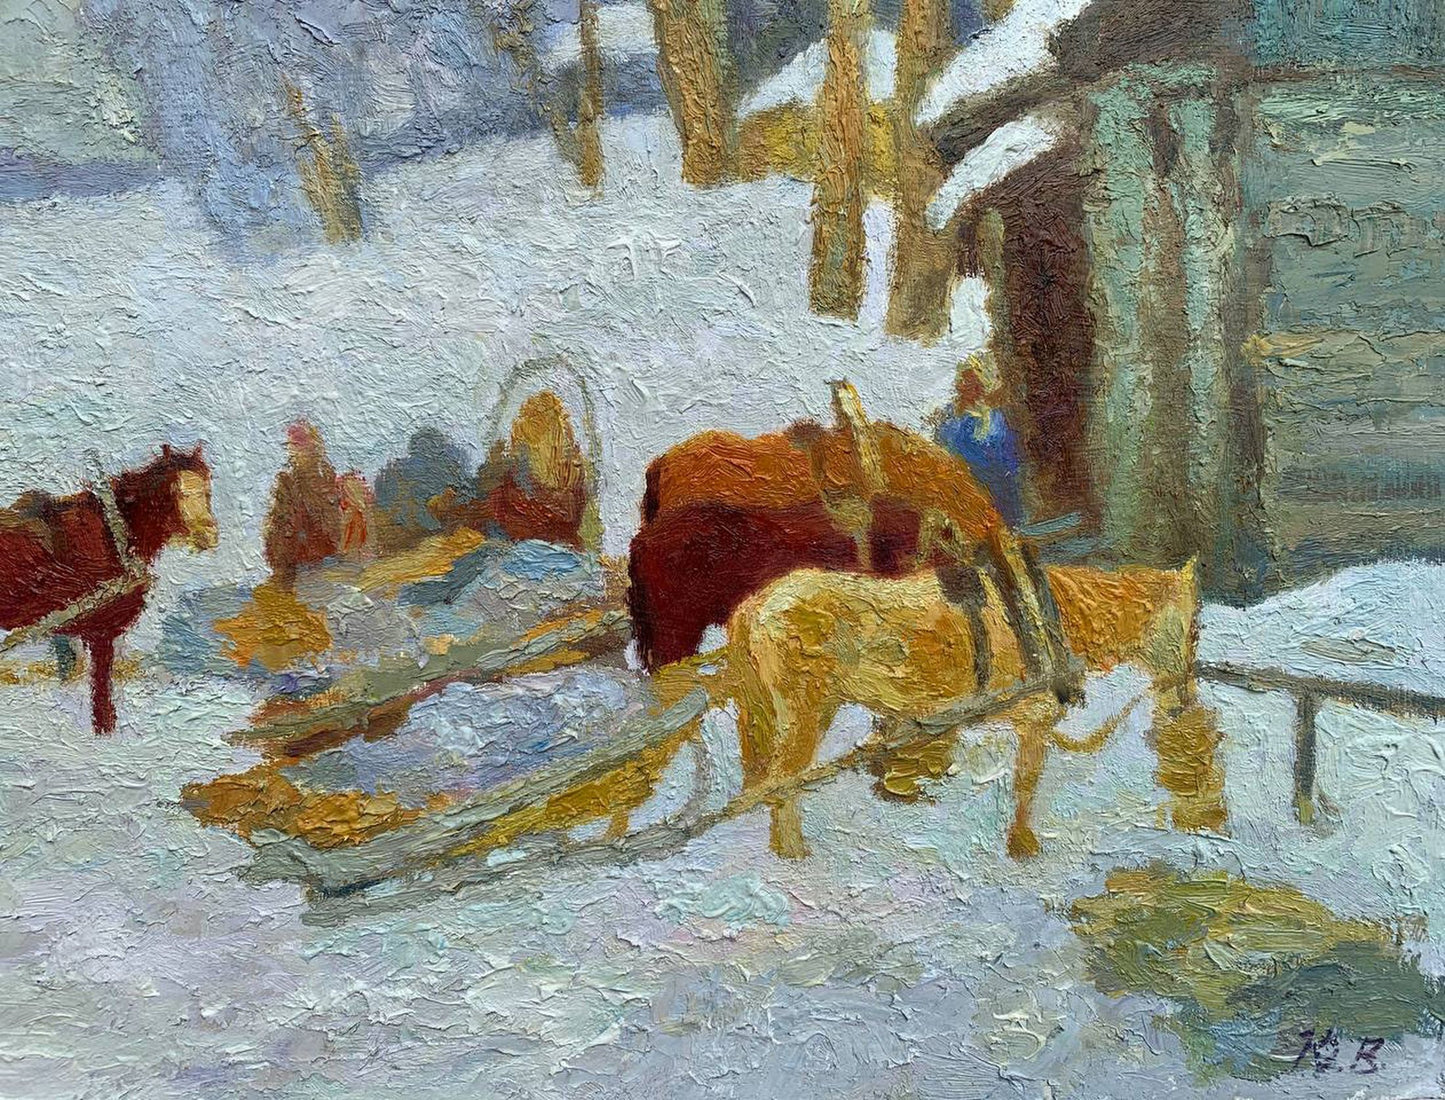 Oil painting Expectation Vladimir Yakovlevich Yukin